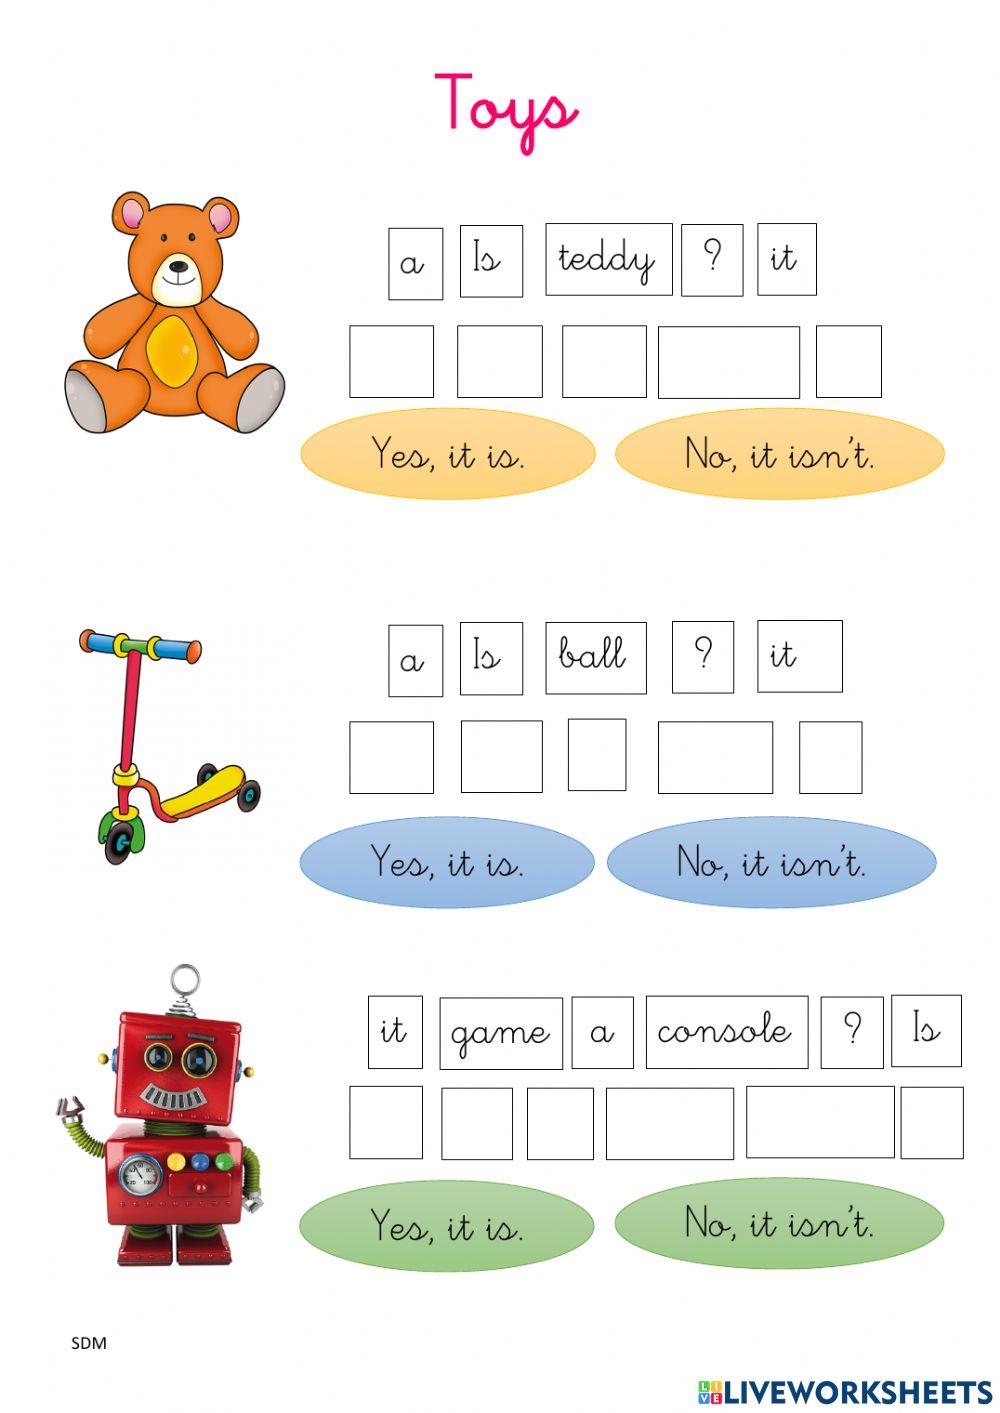 Toys: Order the sentences